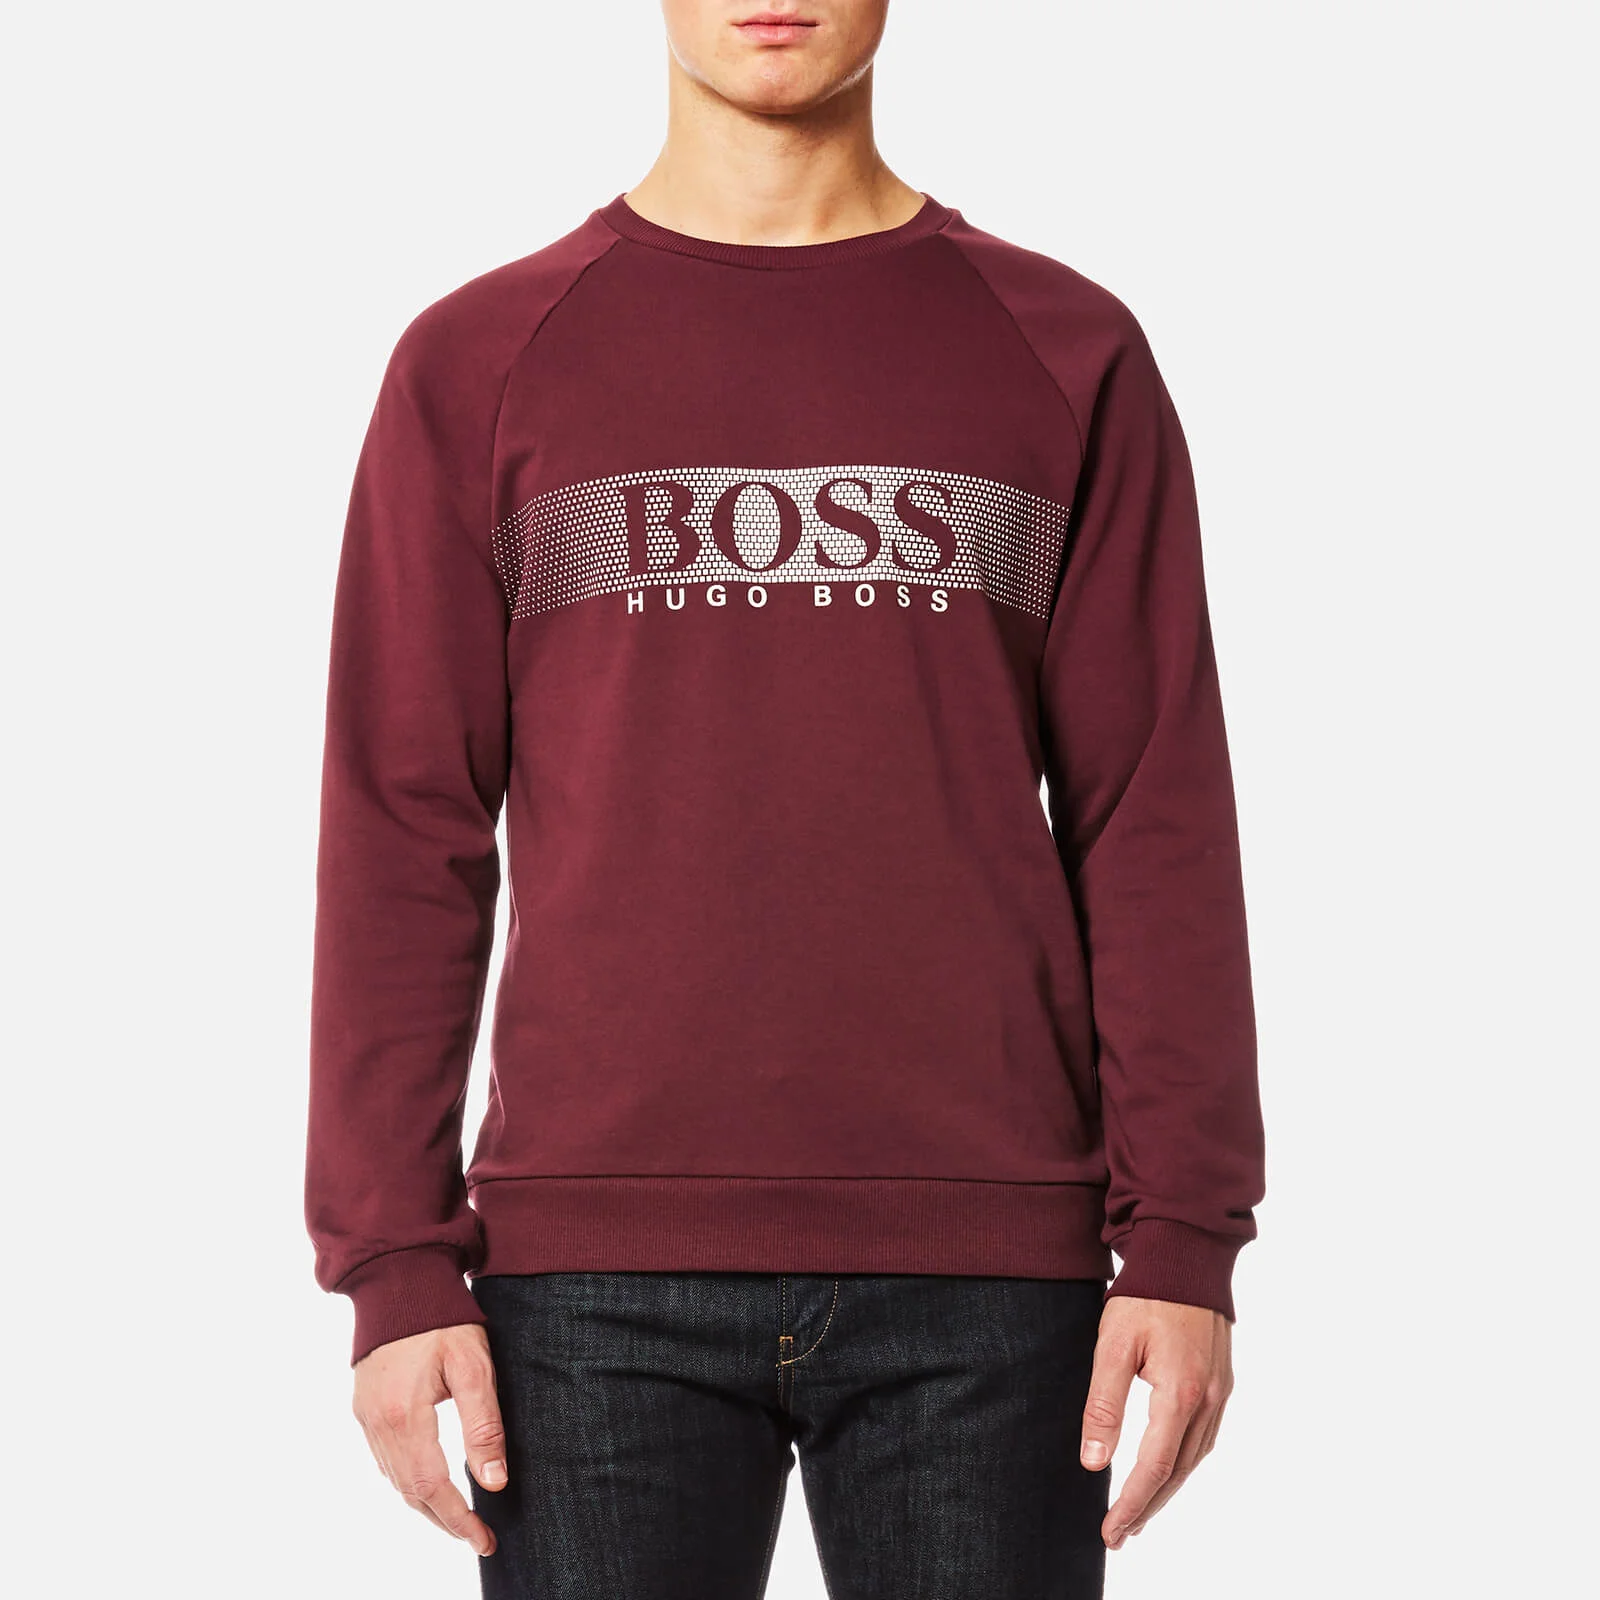 BOSS Hugo Boss Men's Long Sleeve Sweatshirt - Dark Red Image 1